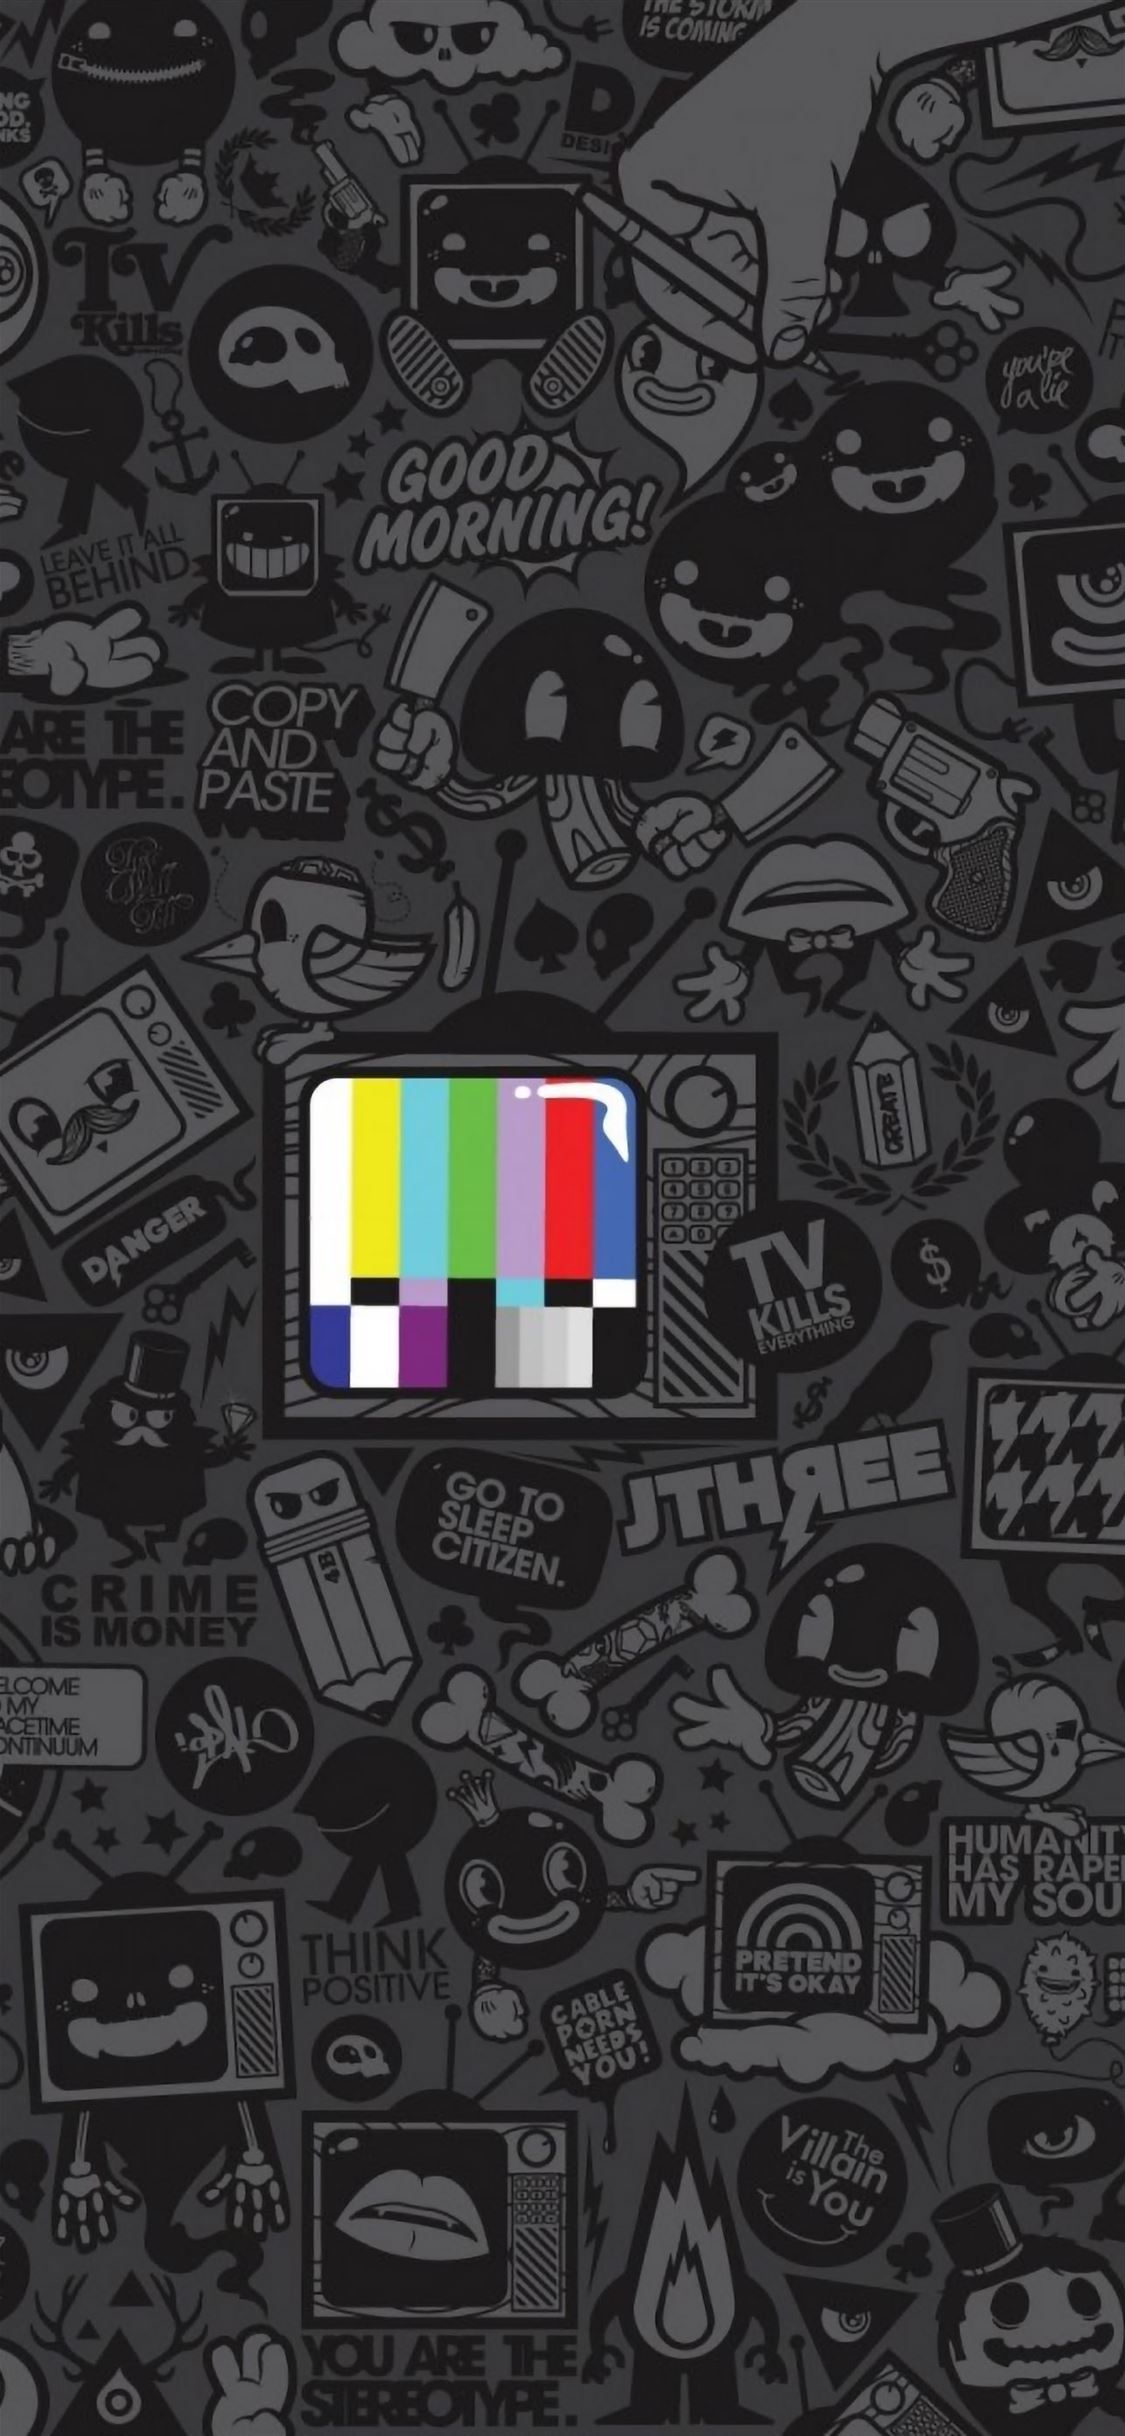 Tv Kills Everything iPhone wallpaper 